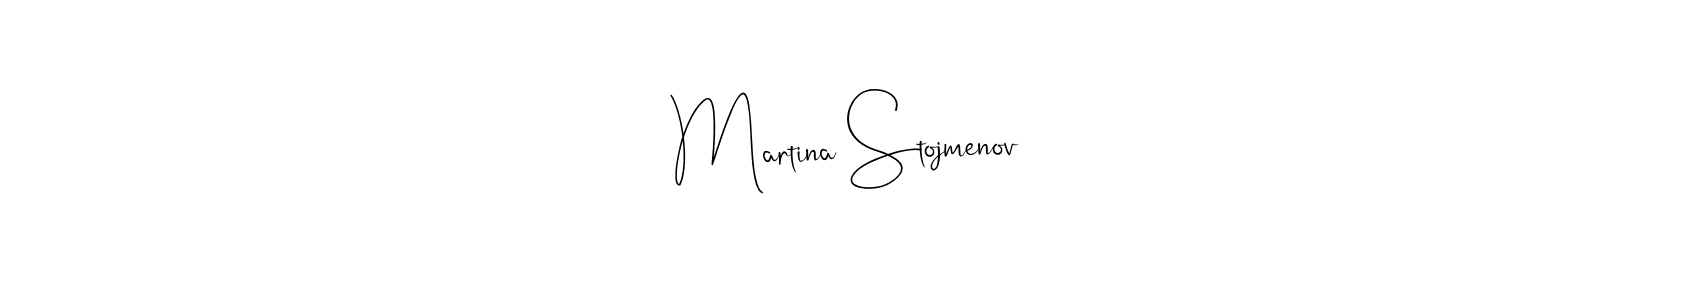 Make a beautiful signature design for name Martina Stojmenov. Use this online signature maker to create a handwritten signature for free. Martina Stojmenov signature style 4 images and pictures png